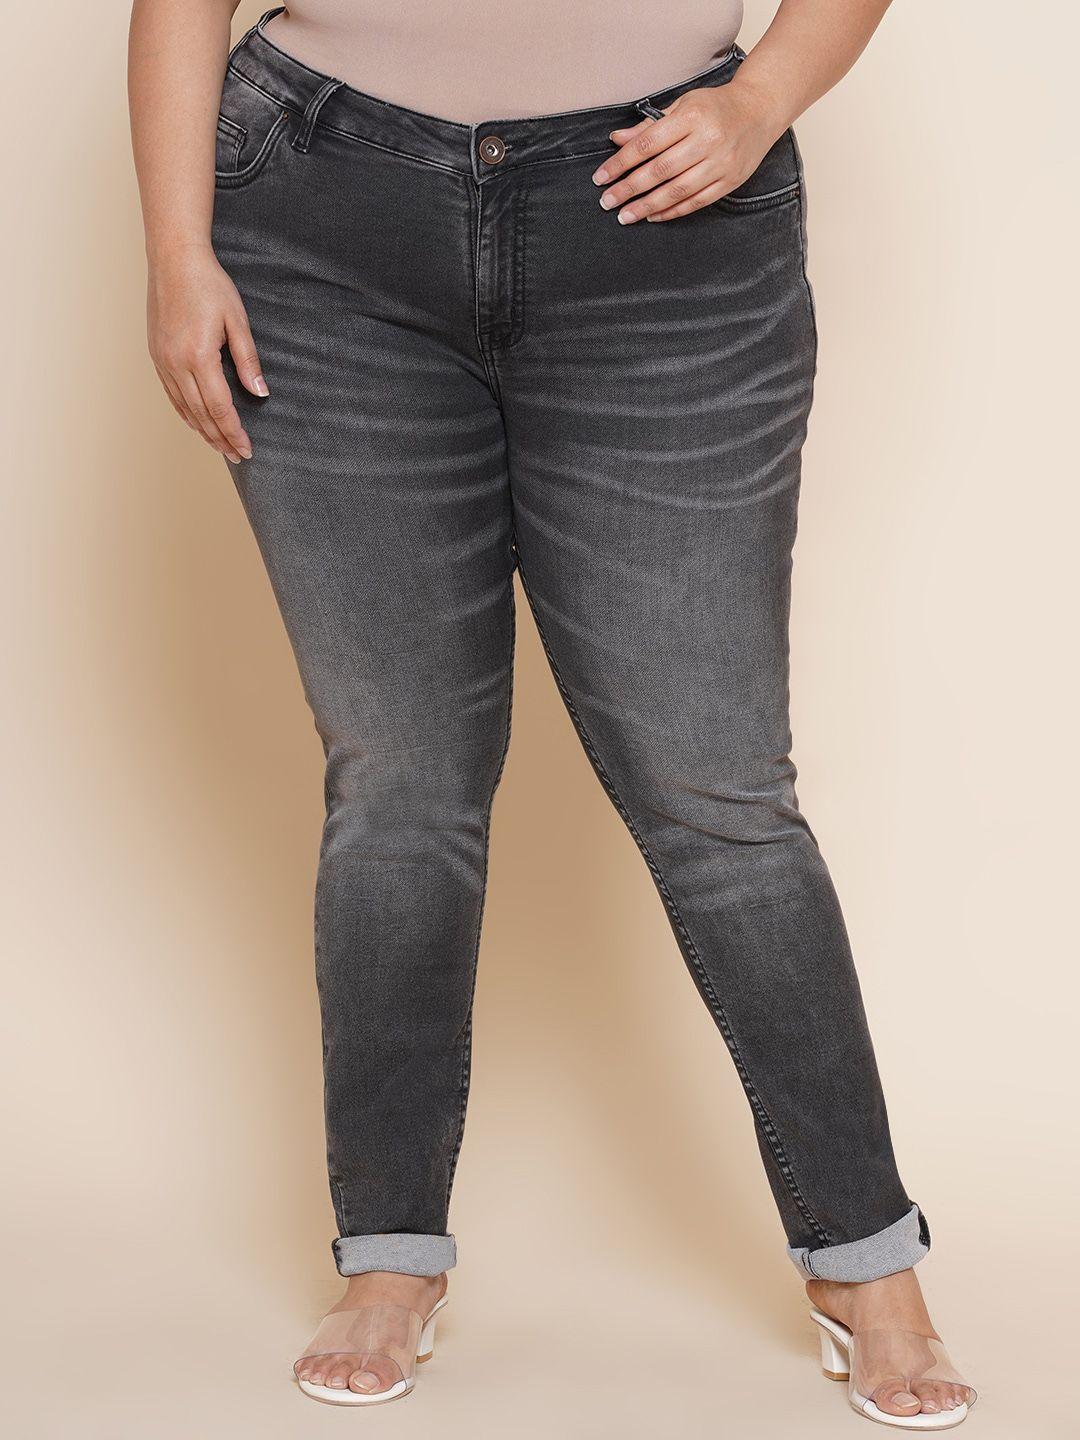 kiaahvi by john pride women plus size heavy fade mid-rise stretchable jeans